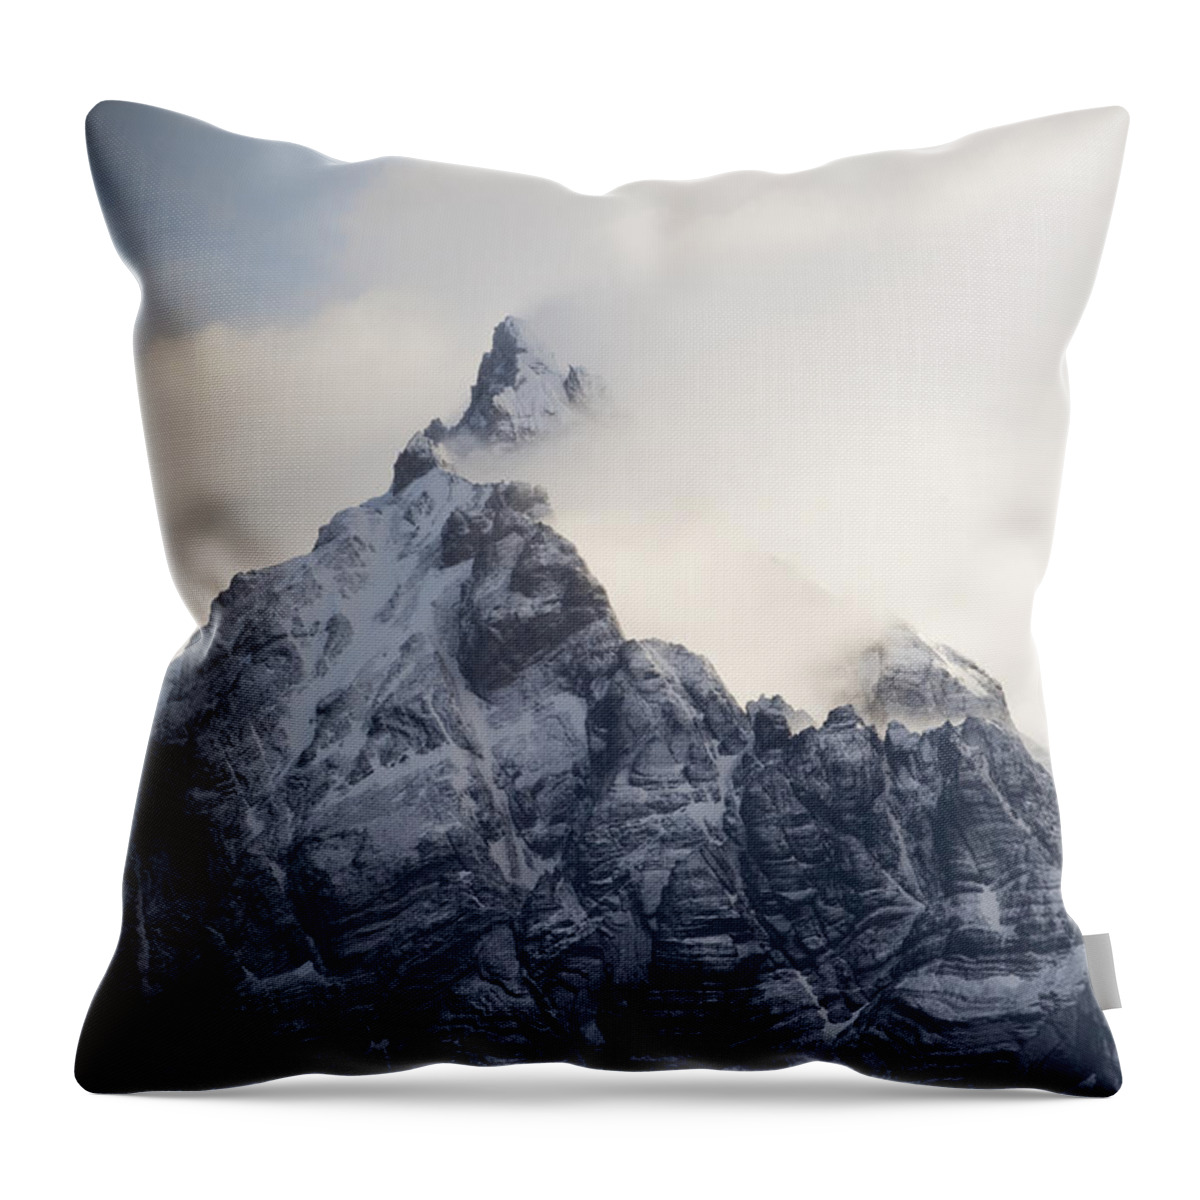 00429501 Throw Pillow featuring the photograph Mountain Peak In The Salvesen Range by Flip Nicklin